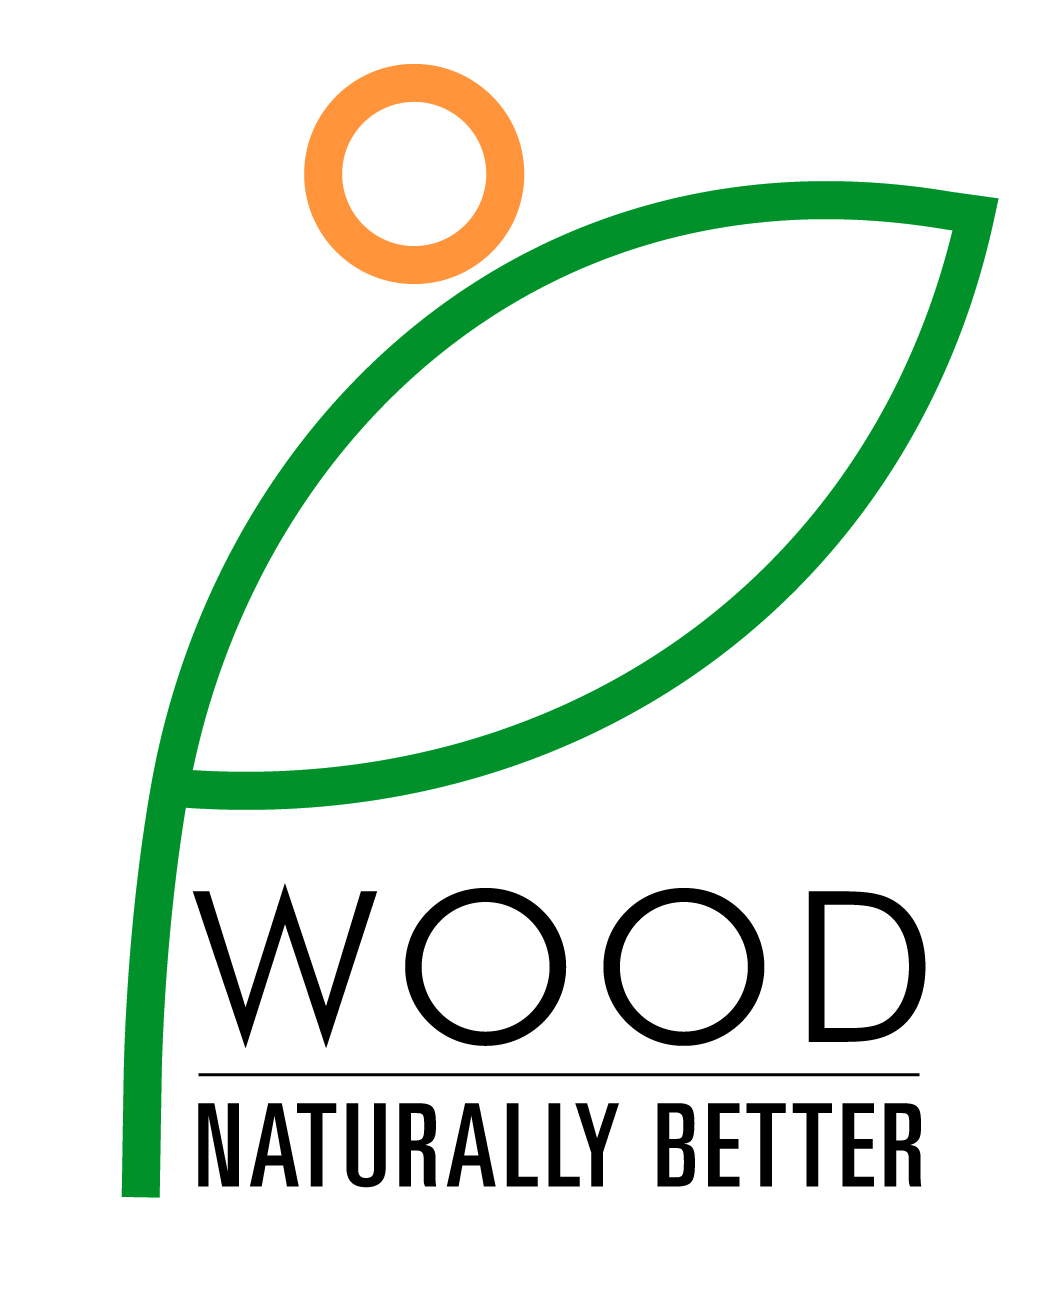 Wood: Naturally Better